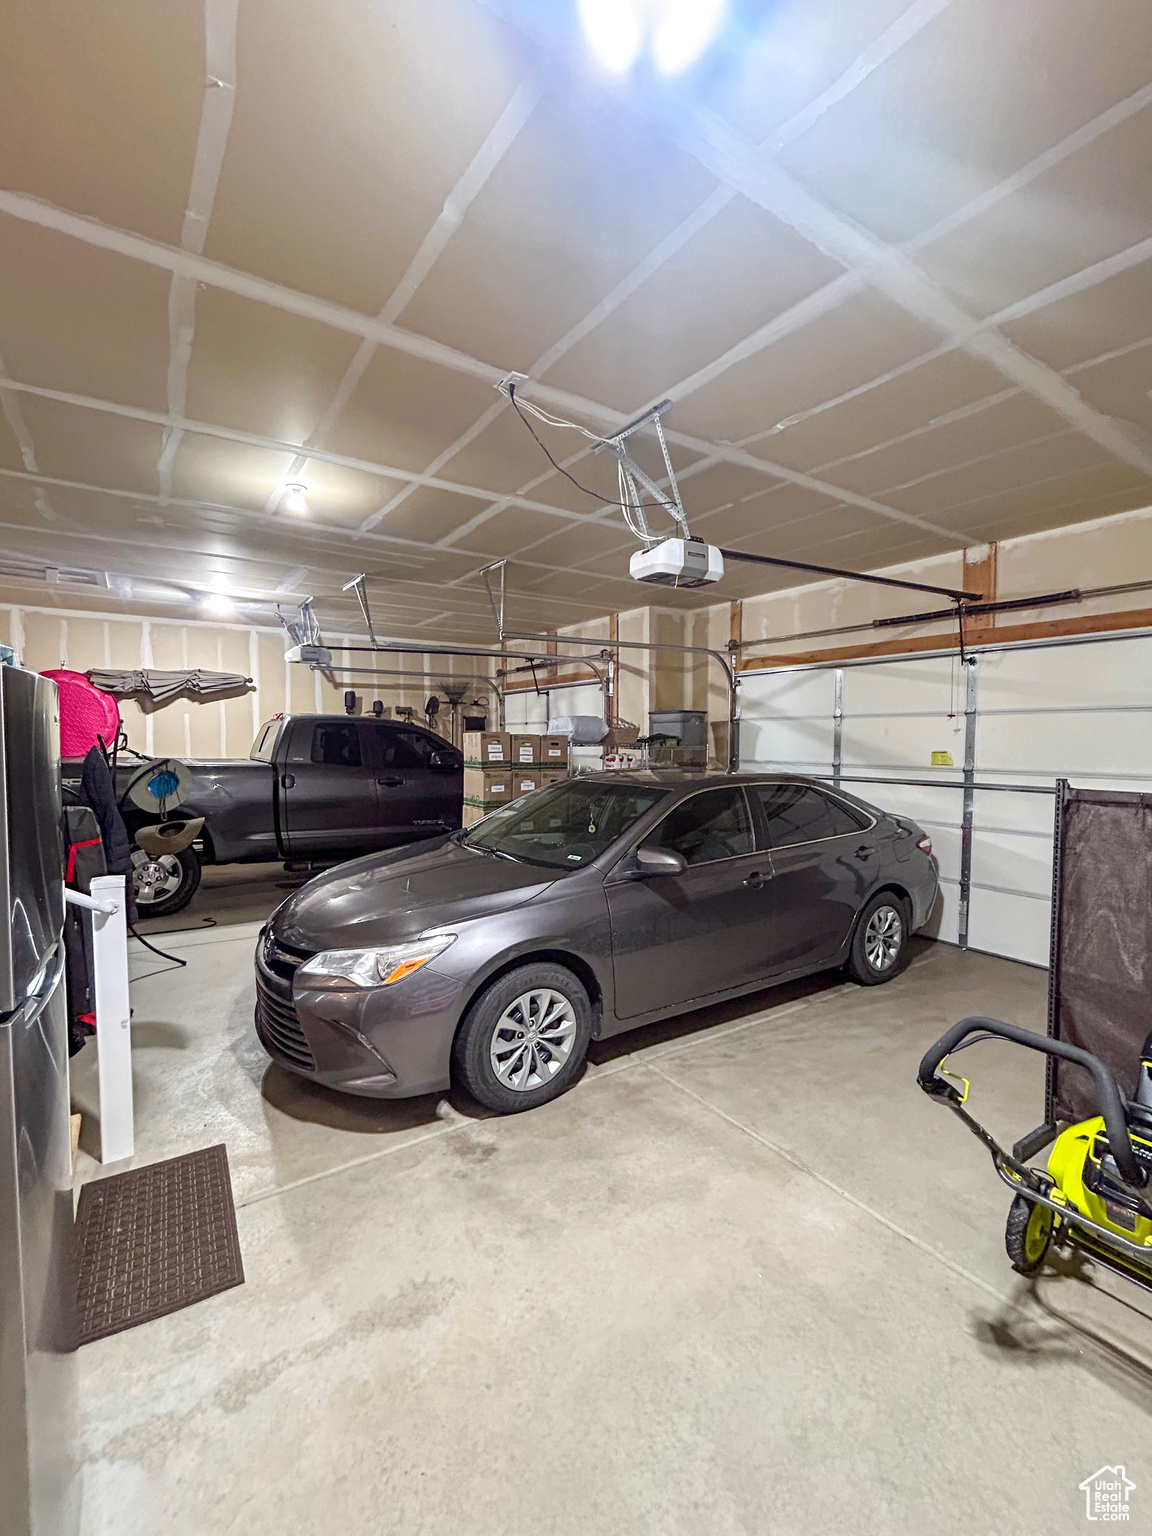 3 car garage!